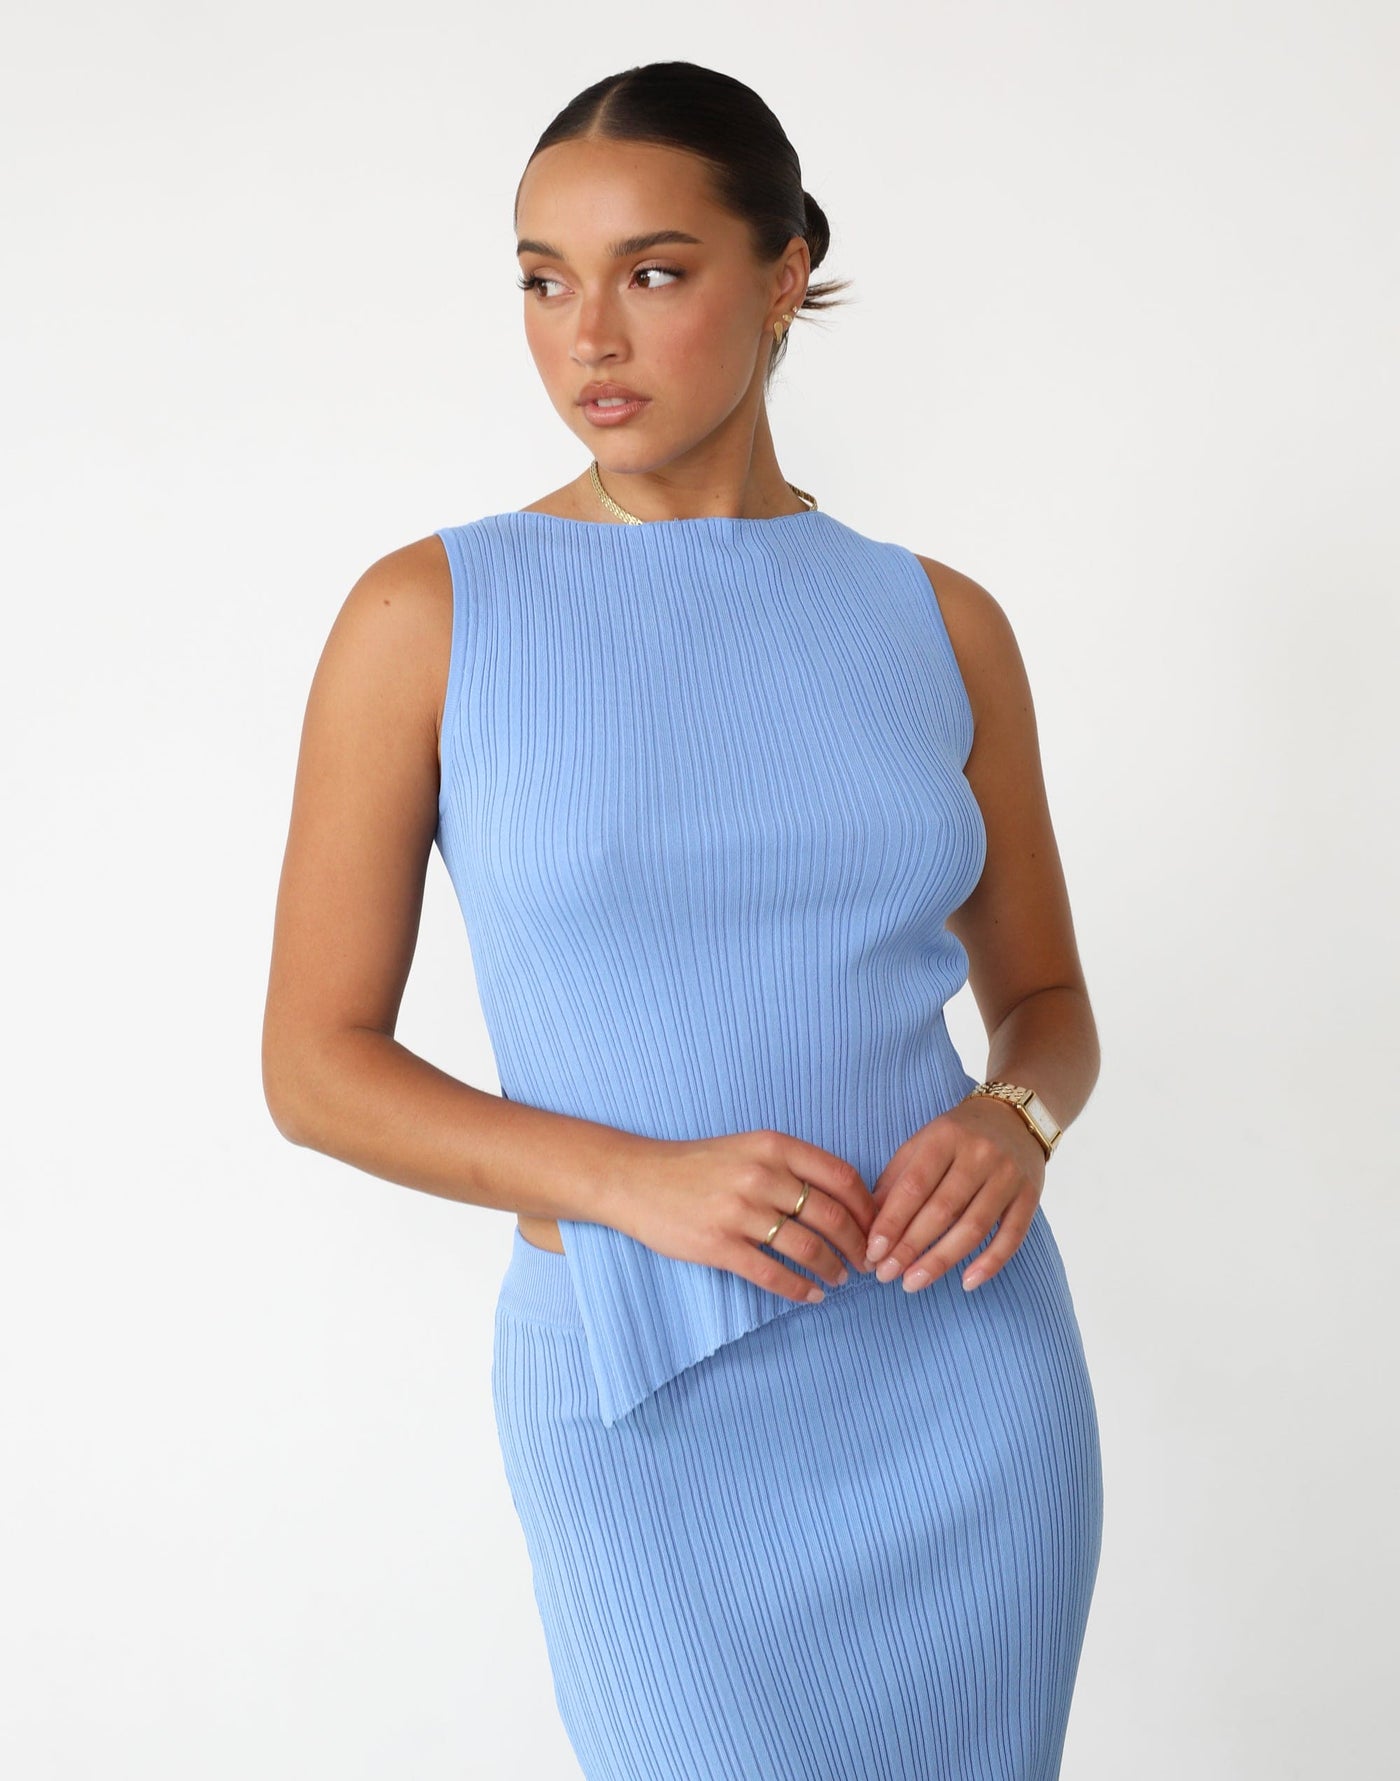 Kienna Top (Ocean Blue) - Asymmetrical Hem Ribbed Top - Women's Top - Charcoal Clothing